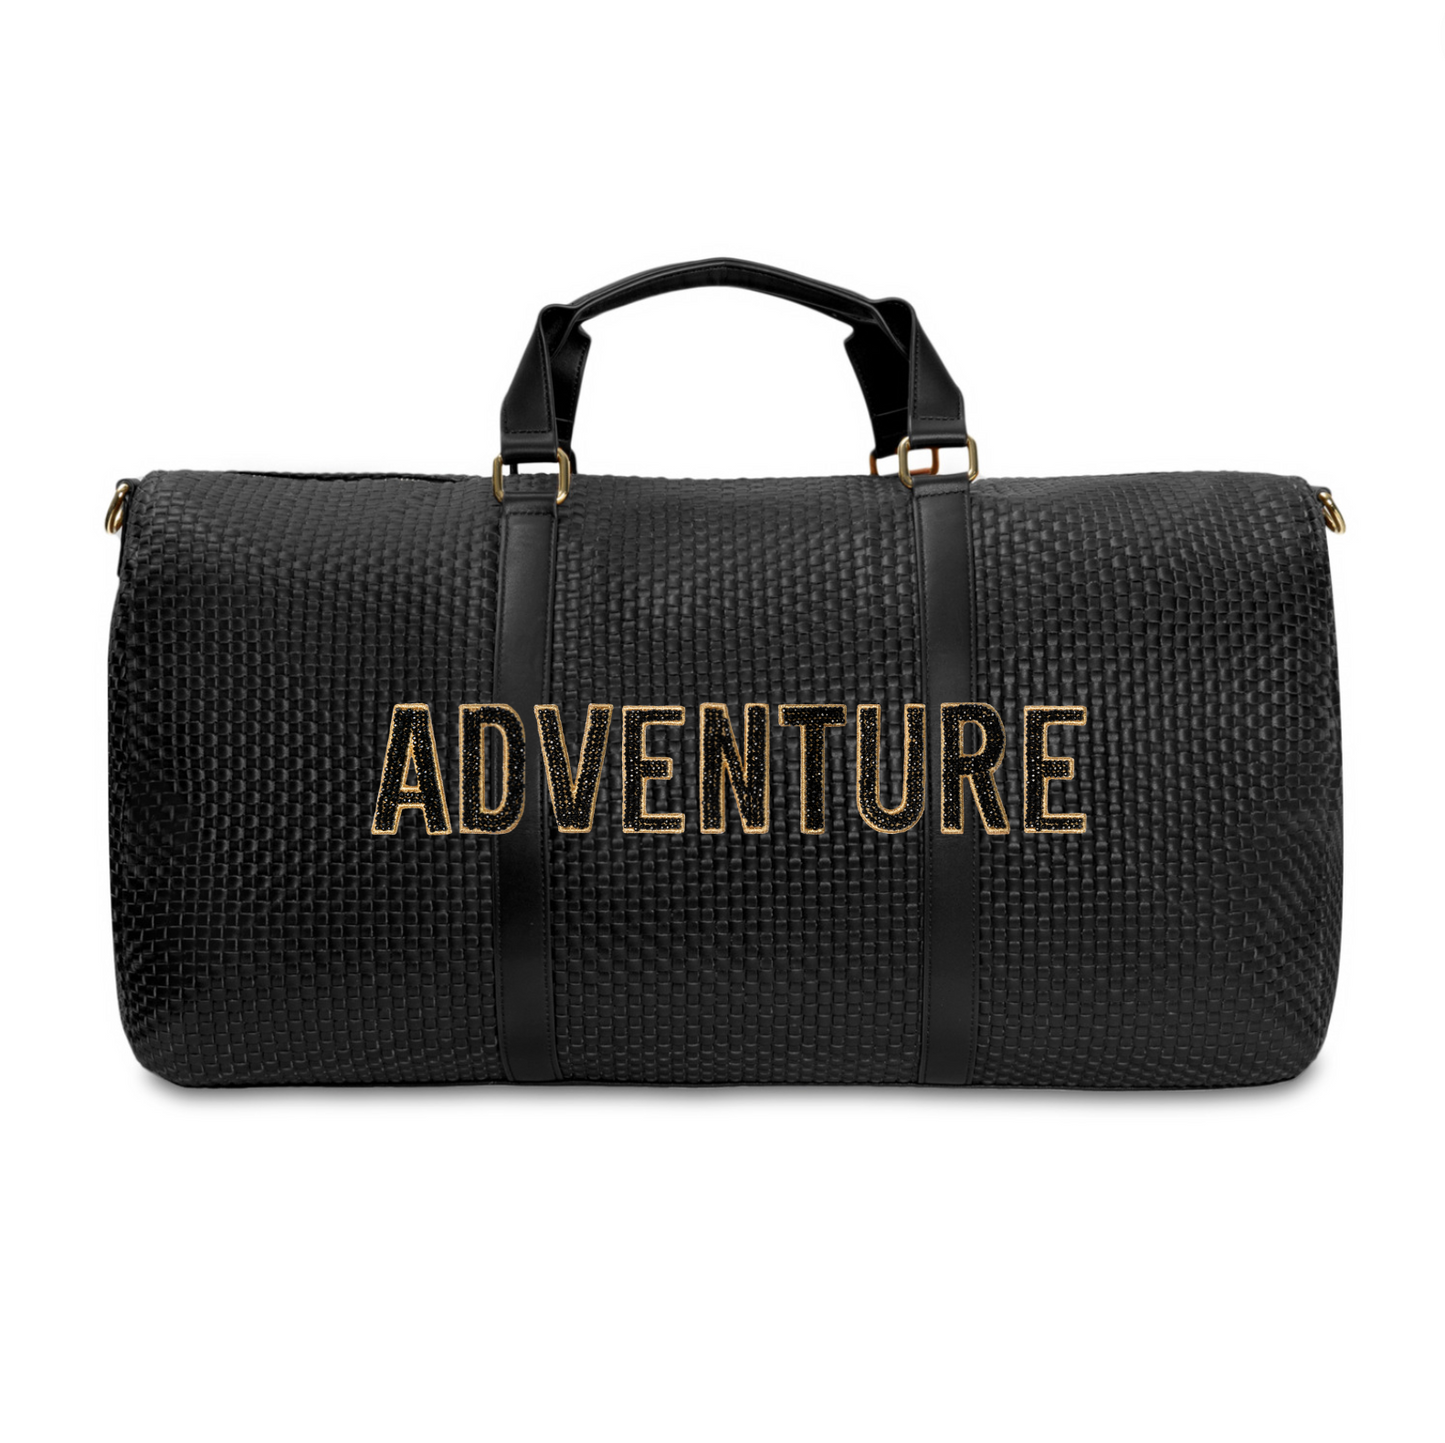 Adventure Duffle Bag | Travel